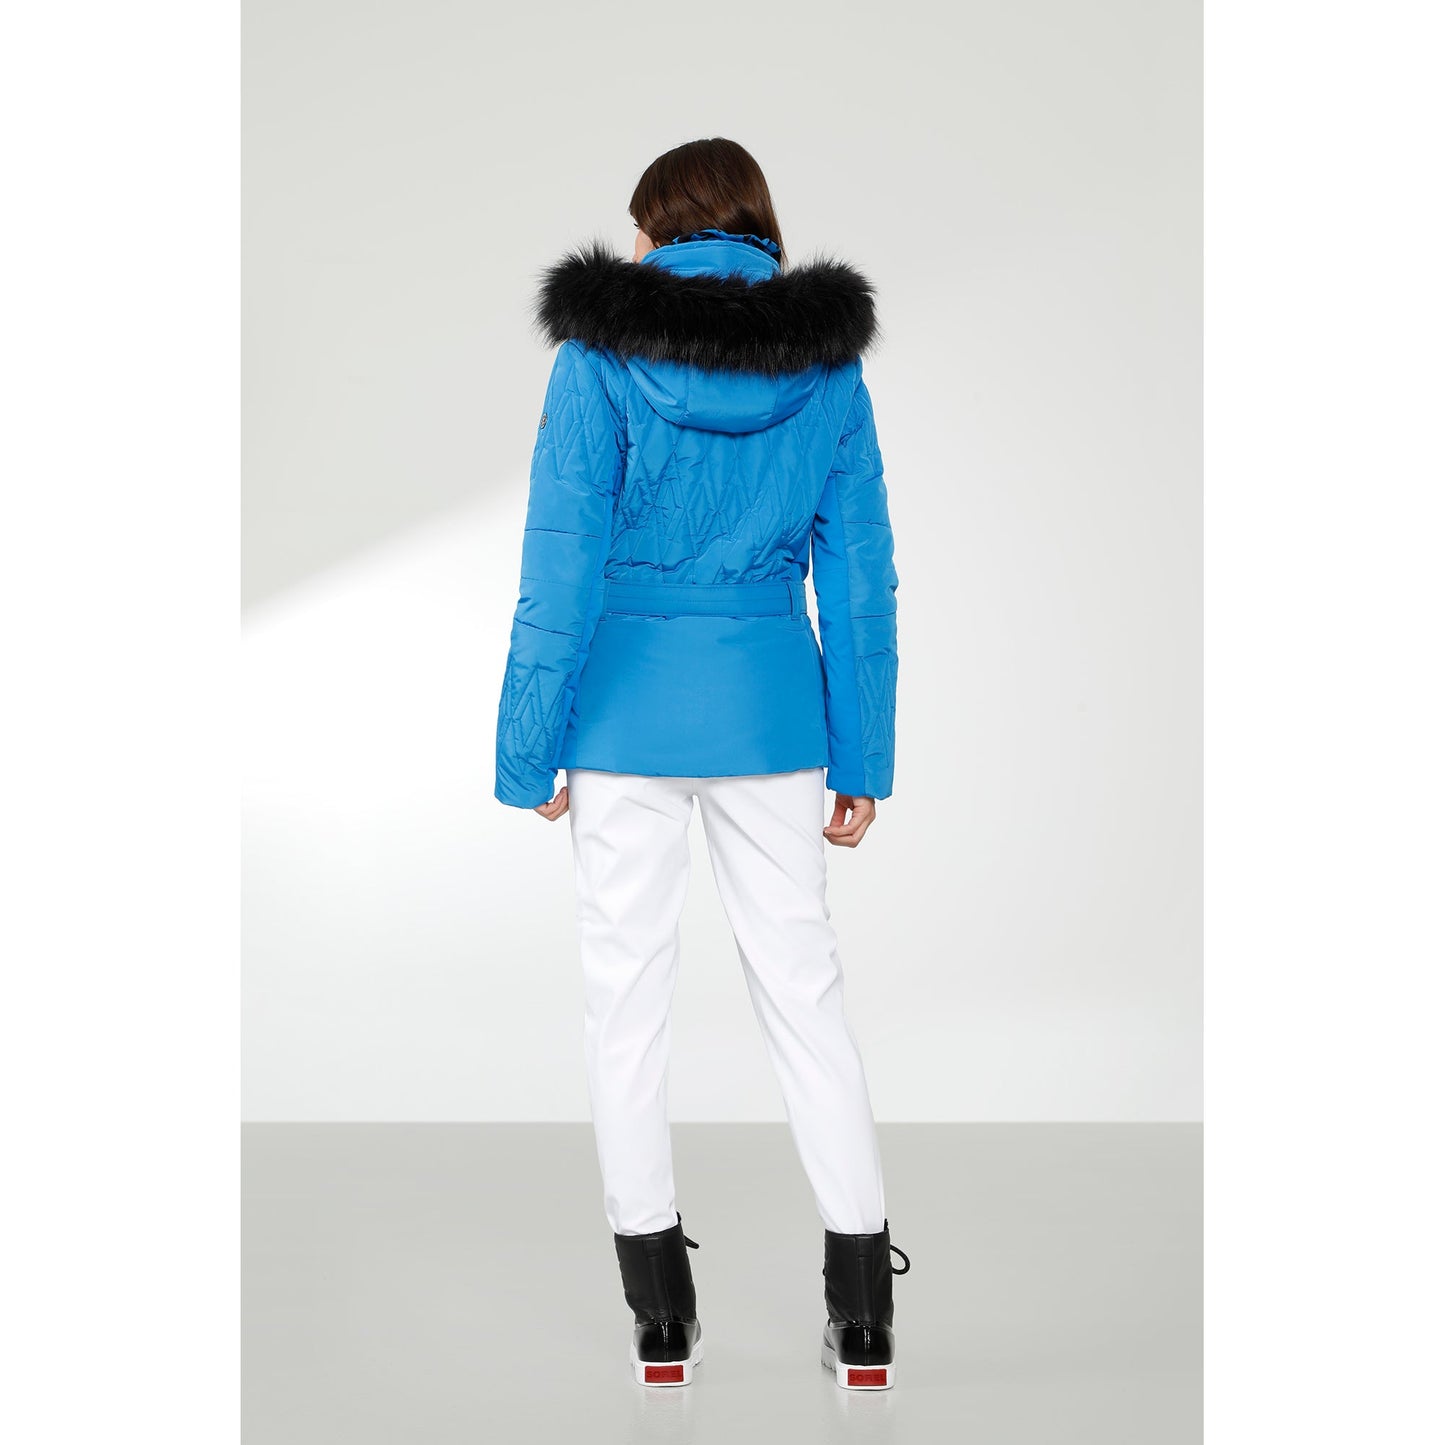 Poivre Blanc Women's Hybrid Ski jacket in Scarlet Red 1003